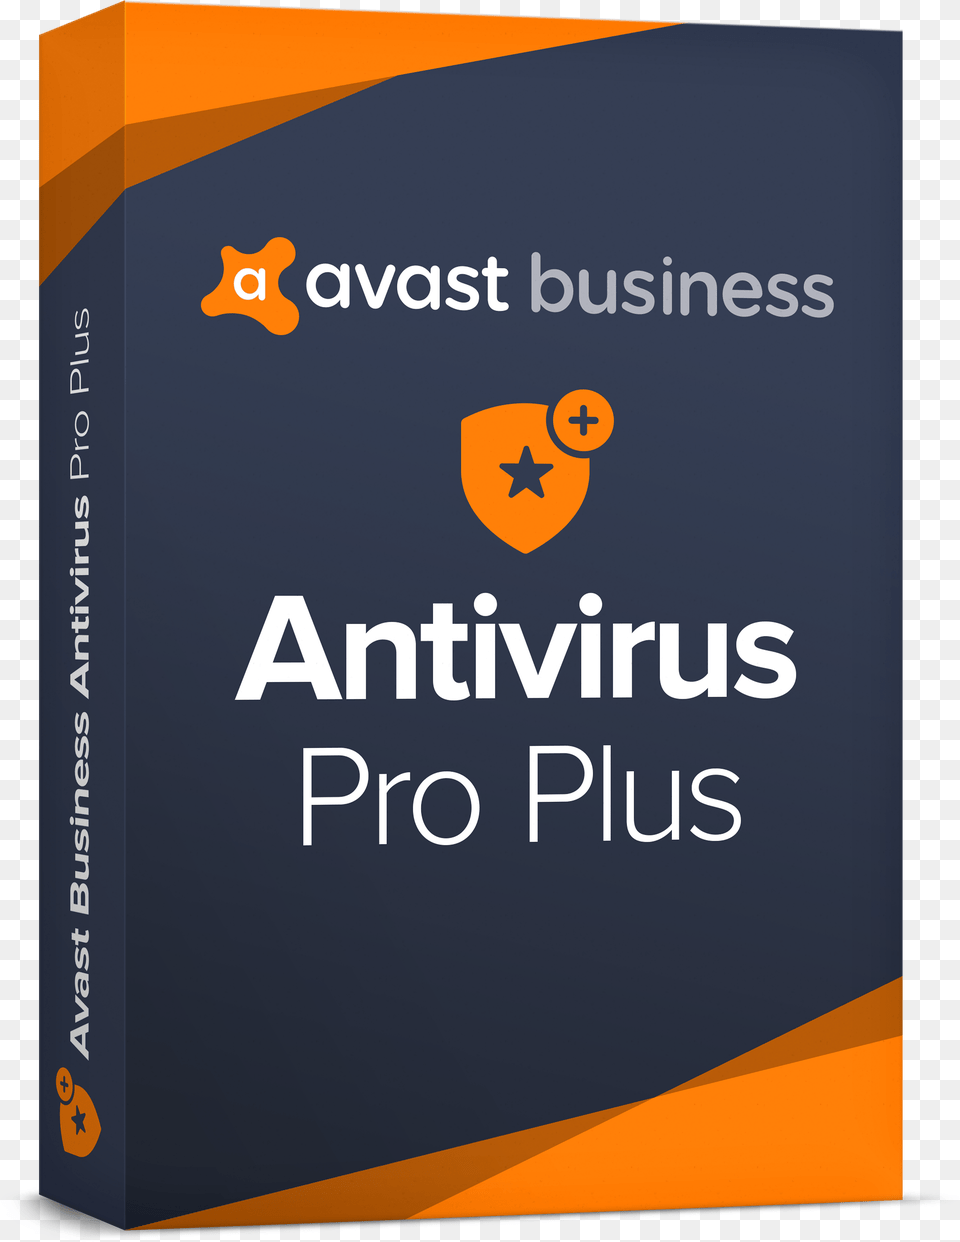 Avast Business Antivirus Pro Plus, Book, Publication Free Png